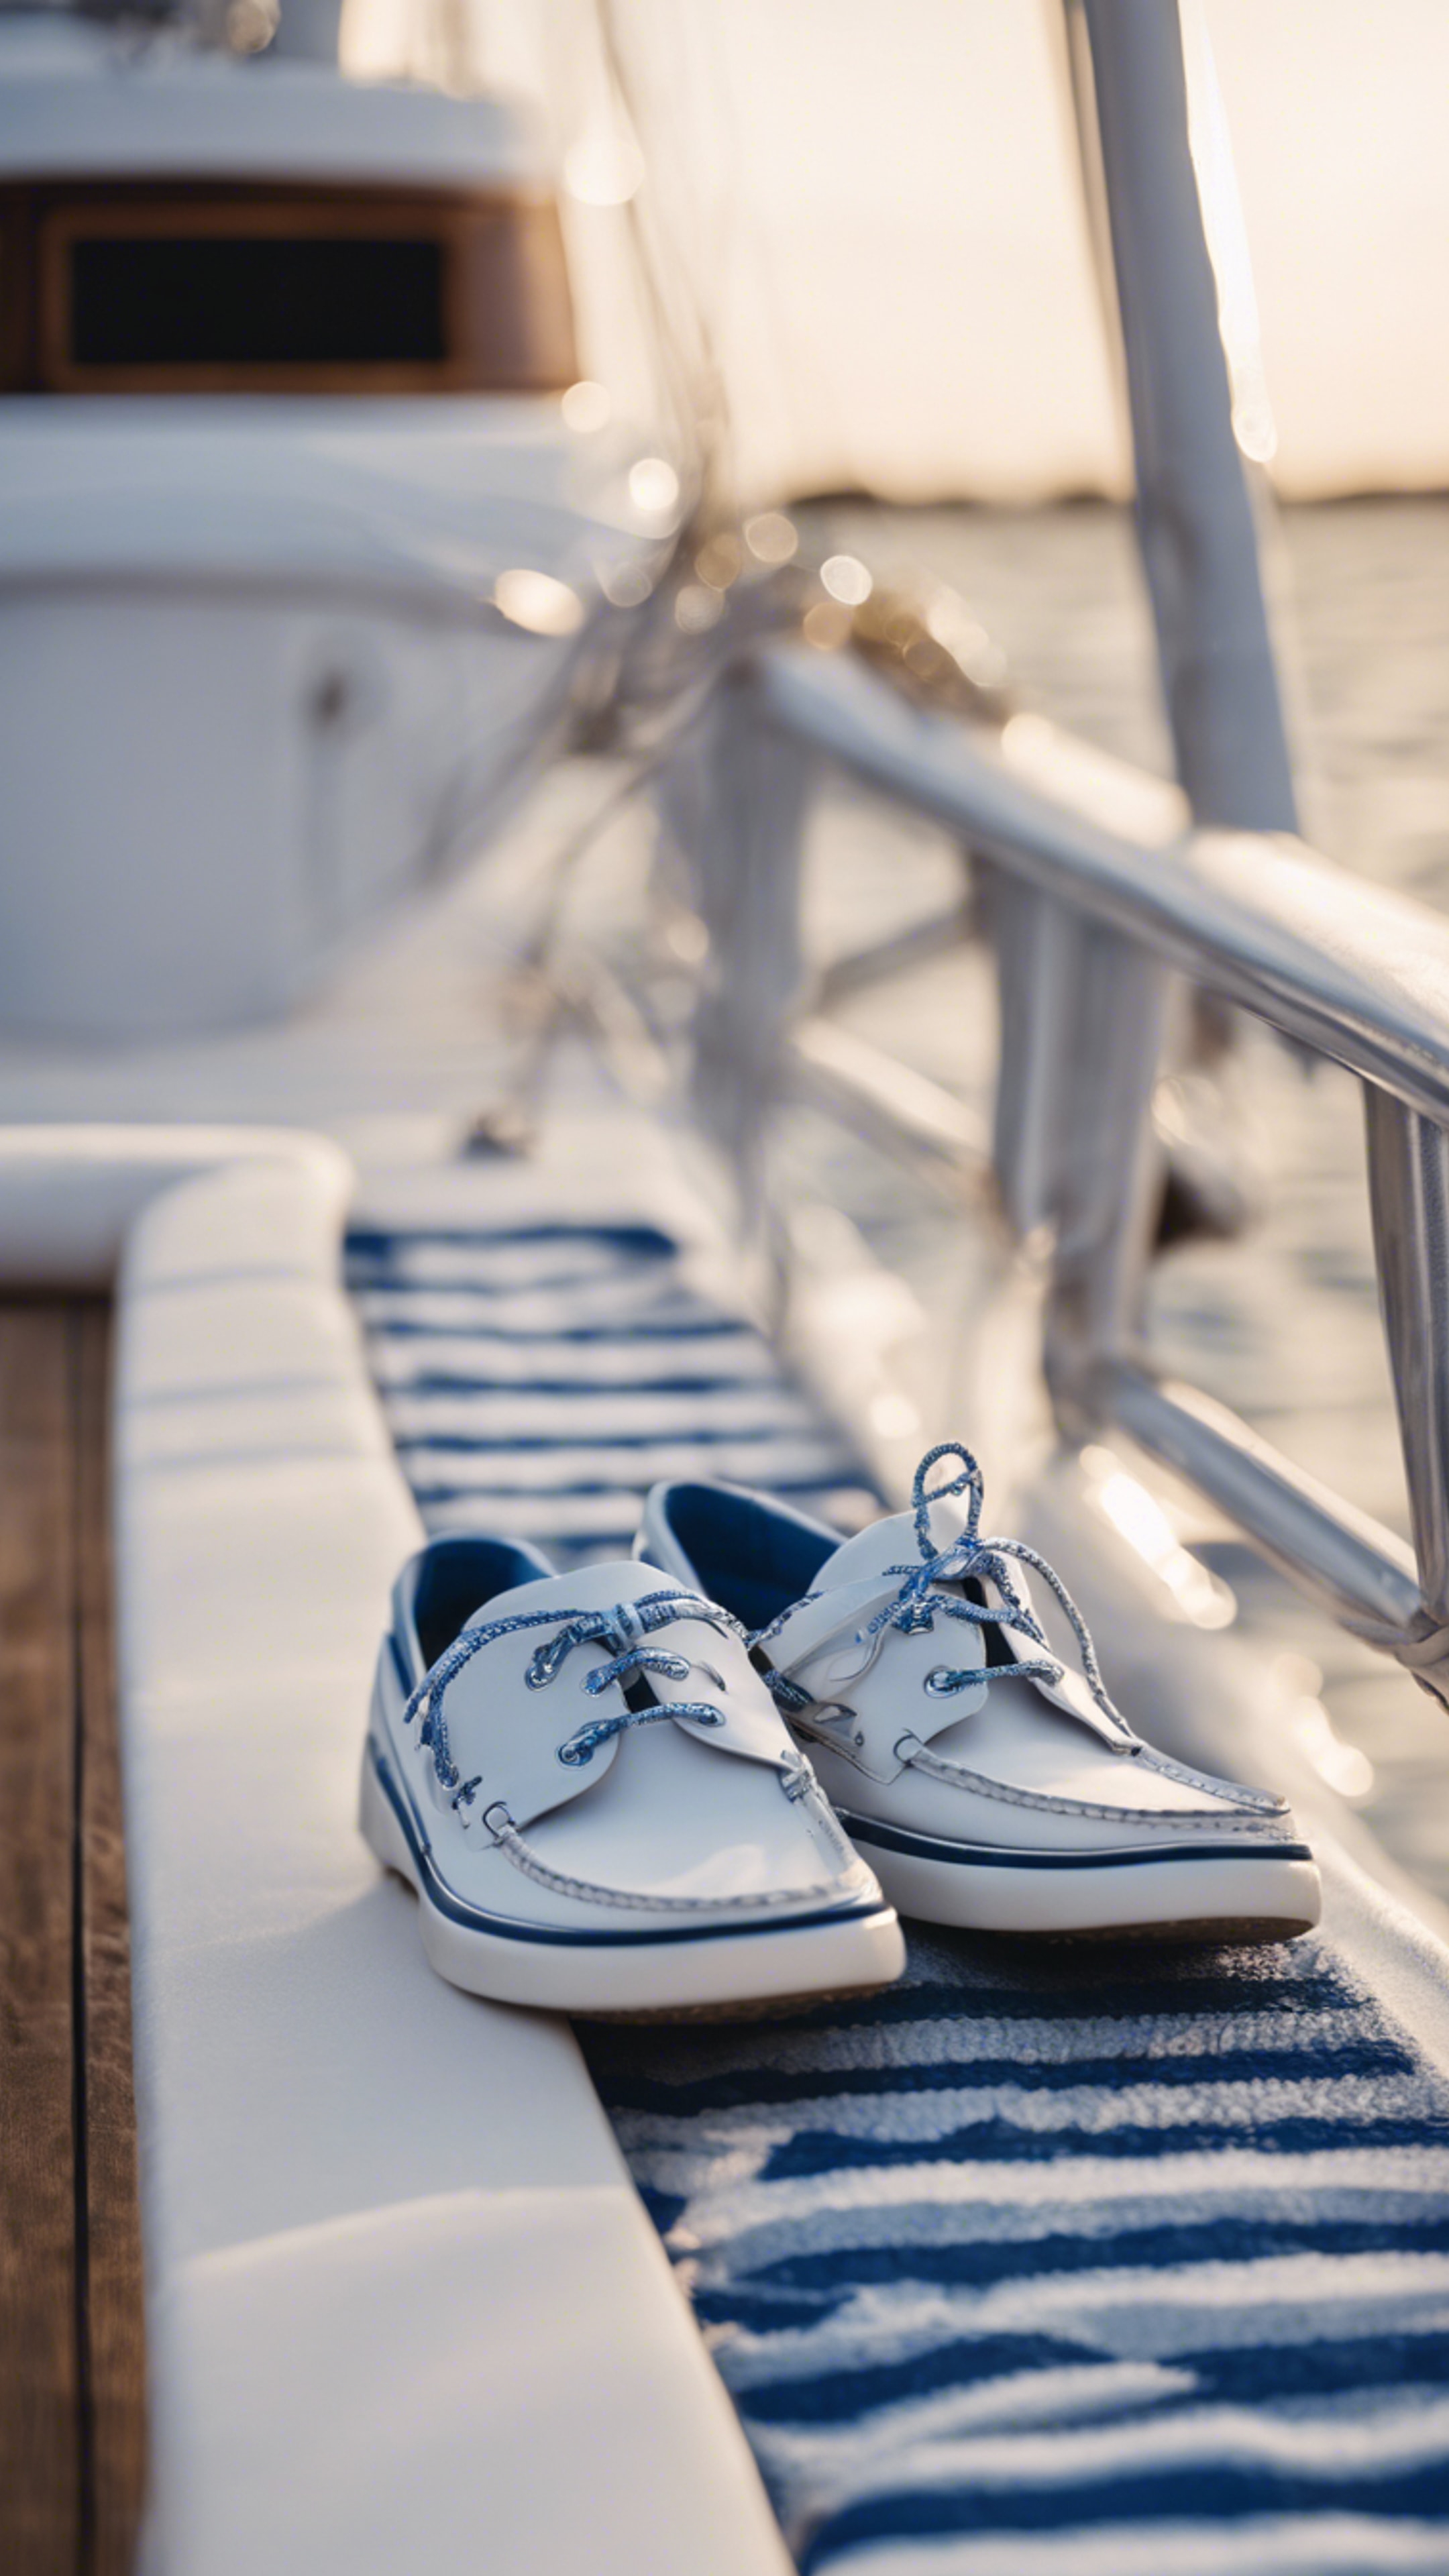 A pair of blue and white boat shoes resting on a yacht deck, reflecting preppy fashion. duvar kağıdı[e5e4a620cbd541dd8bee]